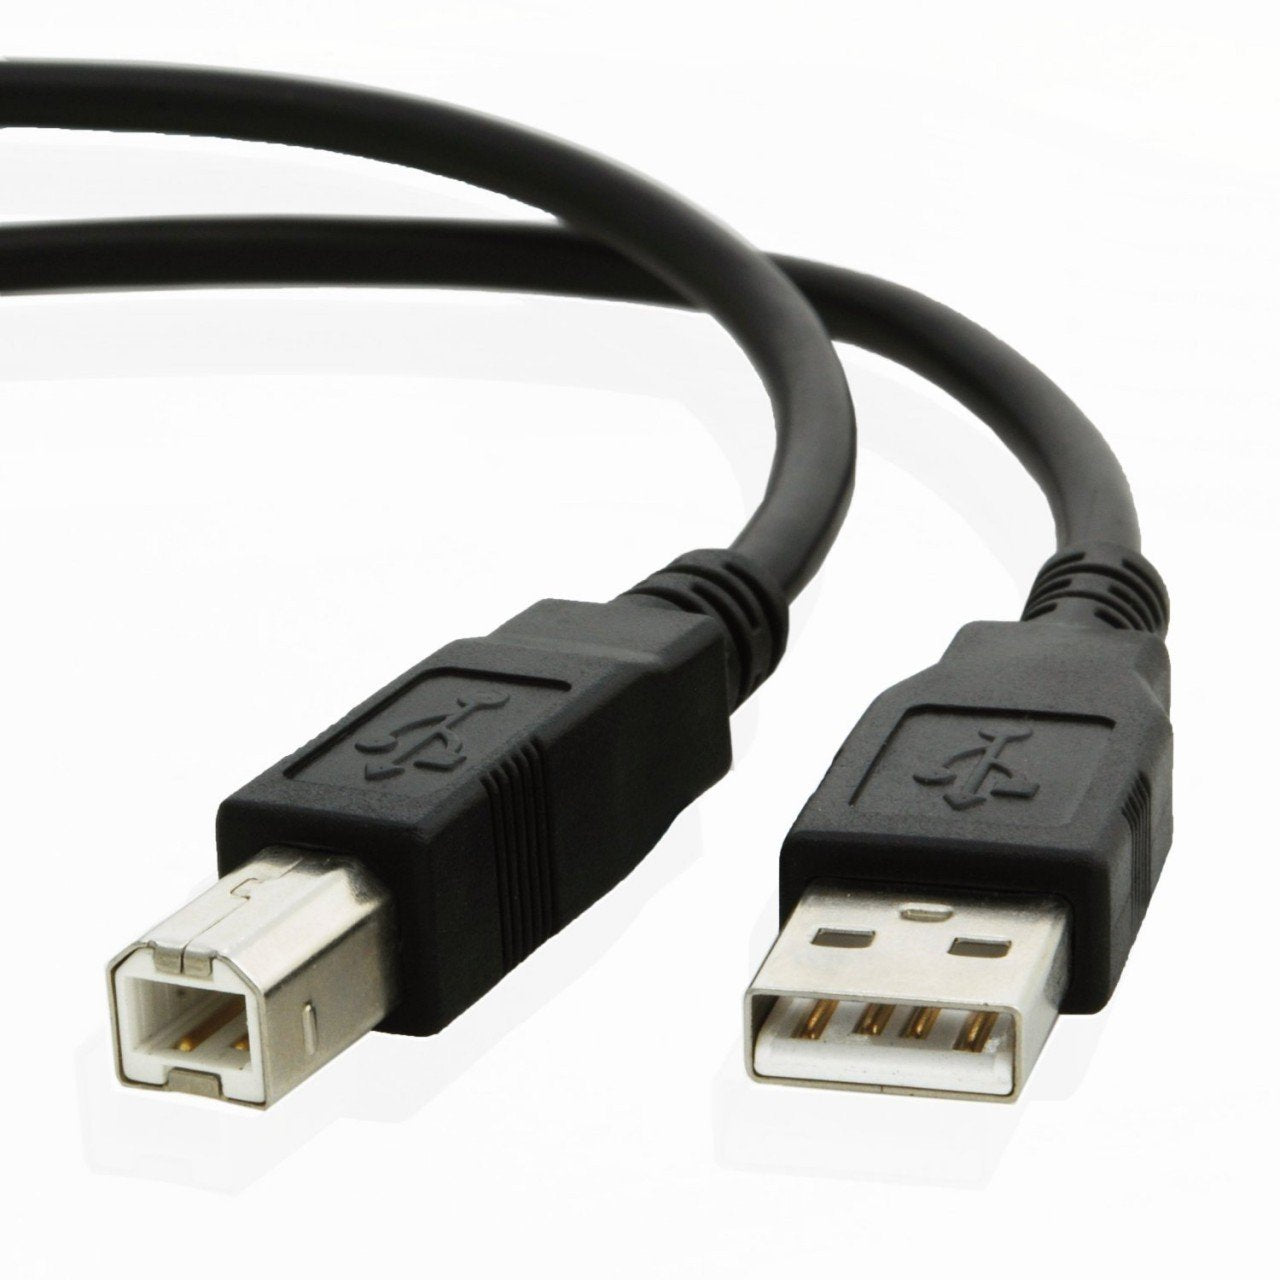 USB cable for Shure MOTIV PG42